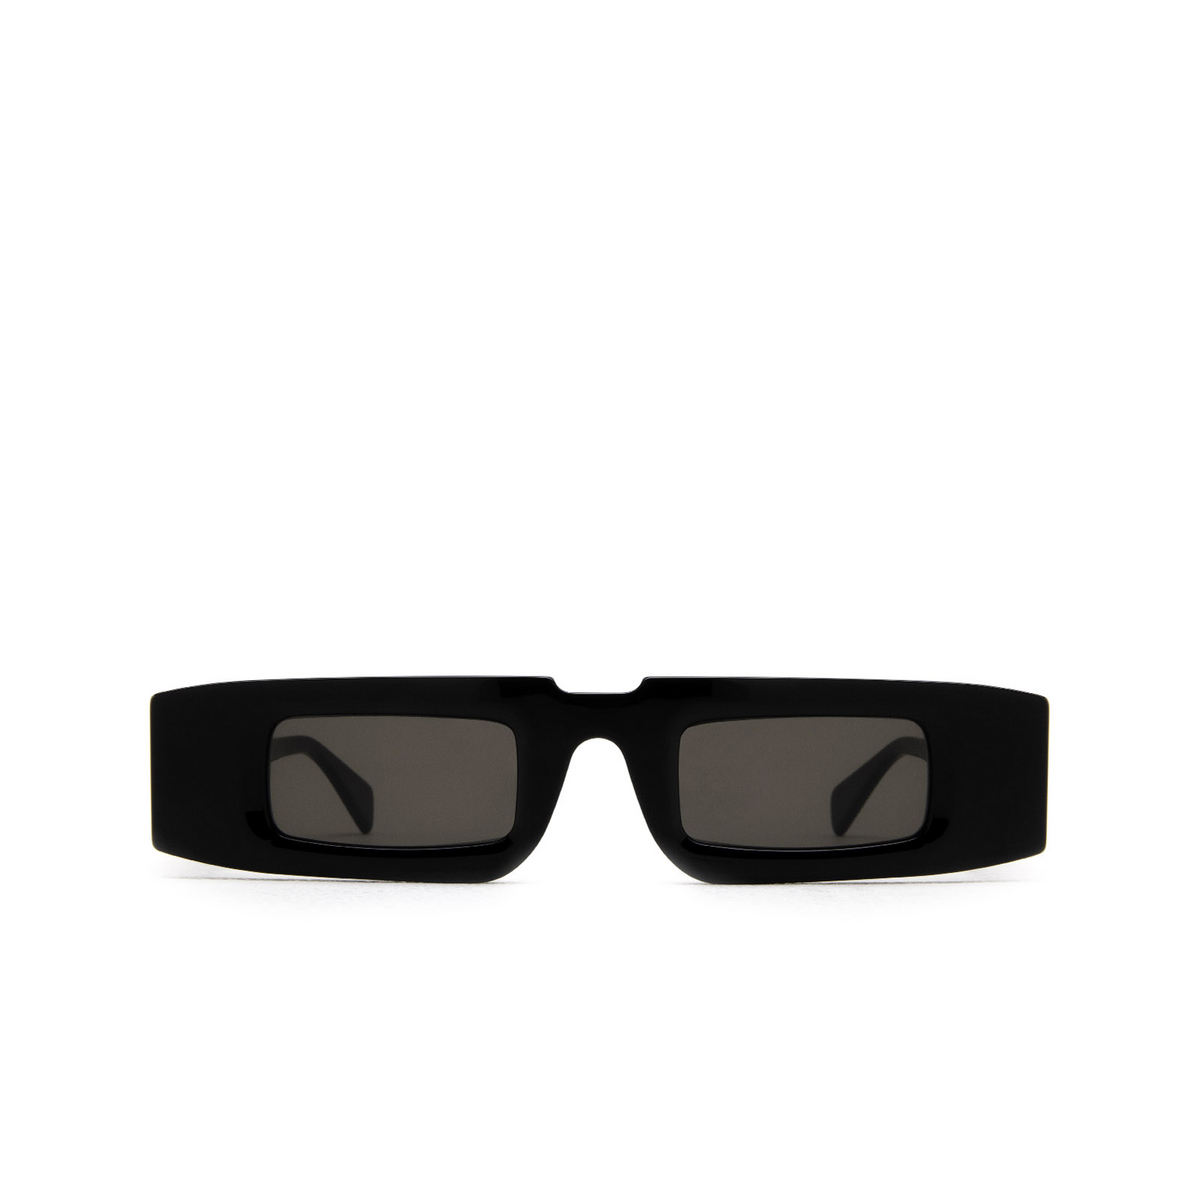 Kuboraum® Rectangle Sunglasses: X5 color Bs Black Shine - front view